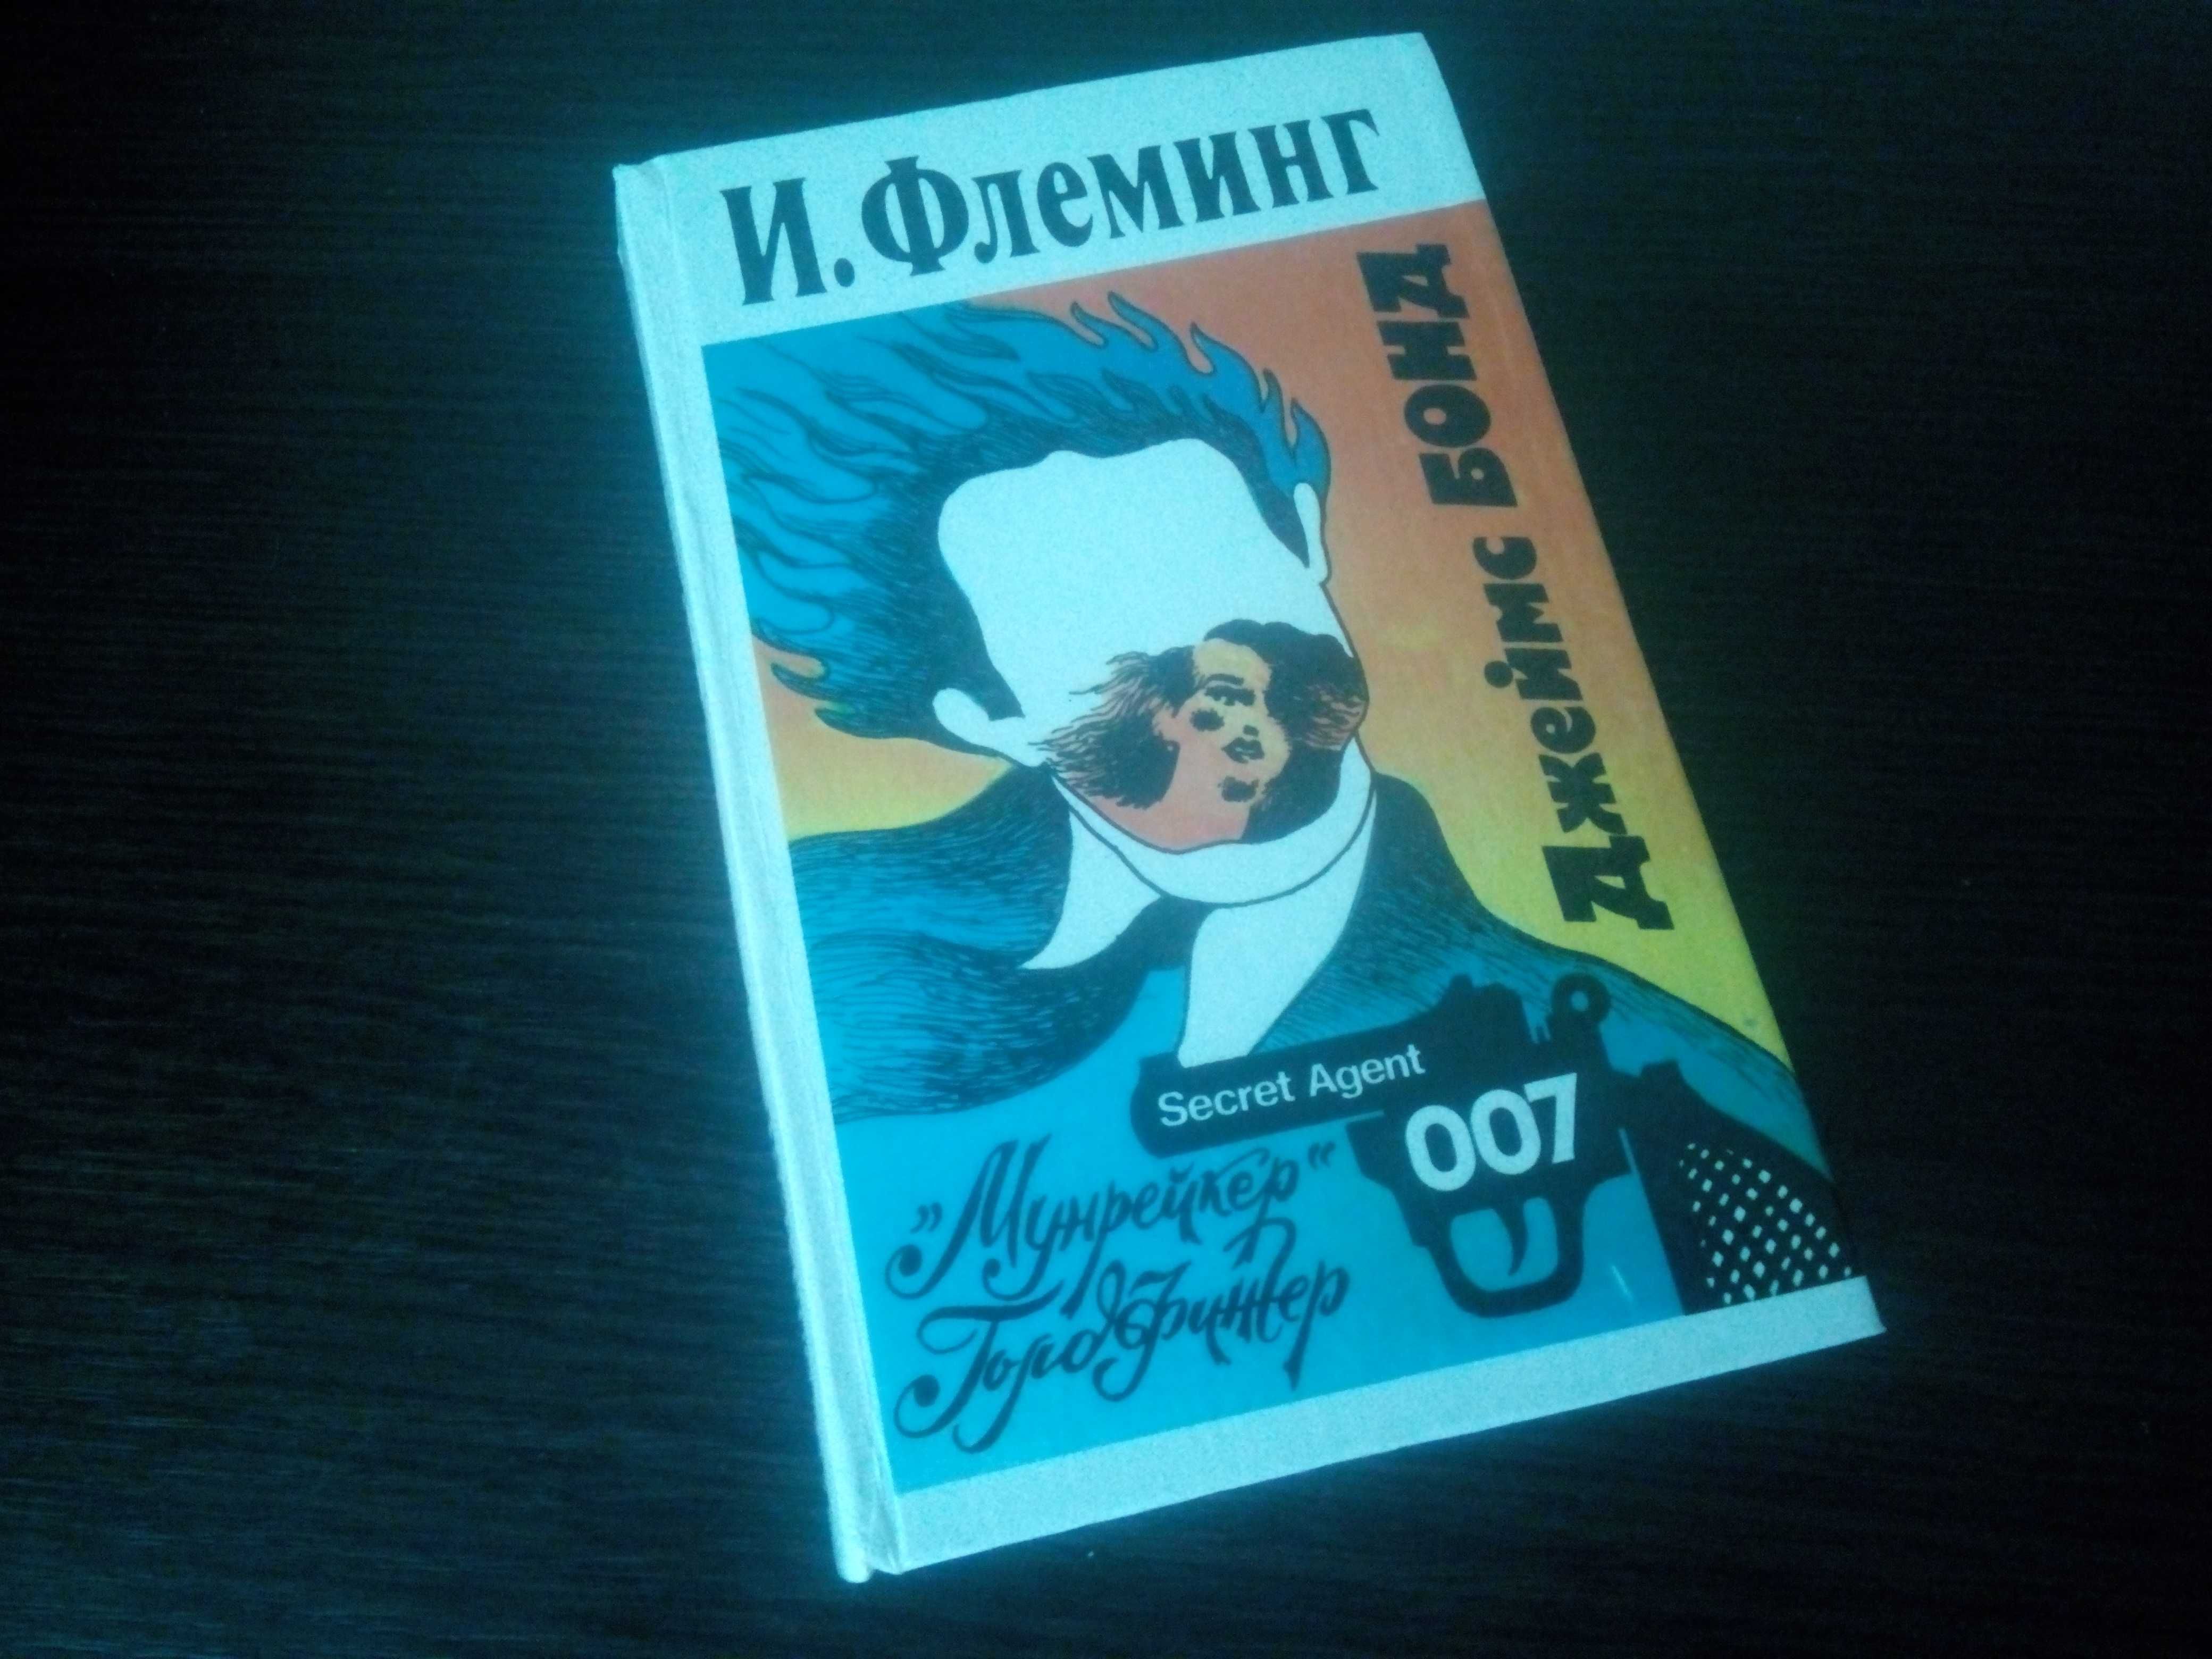 Книга Джеймс Бонд 007 И.Флеминг Мунрейкер Гордфингер Москва 1992 г